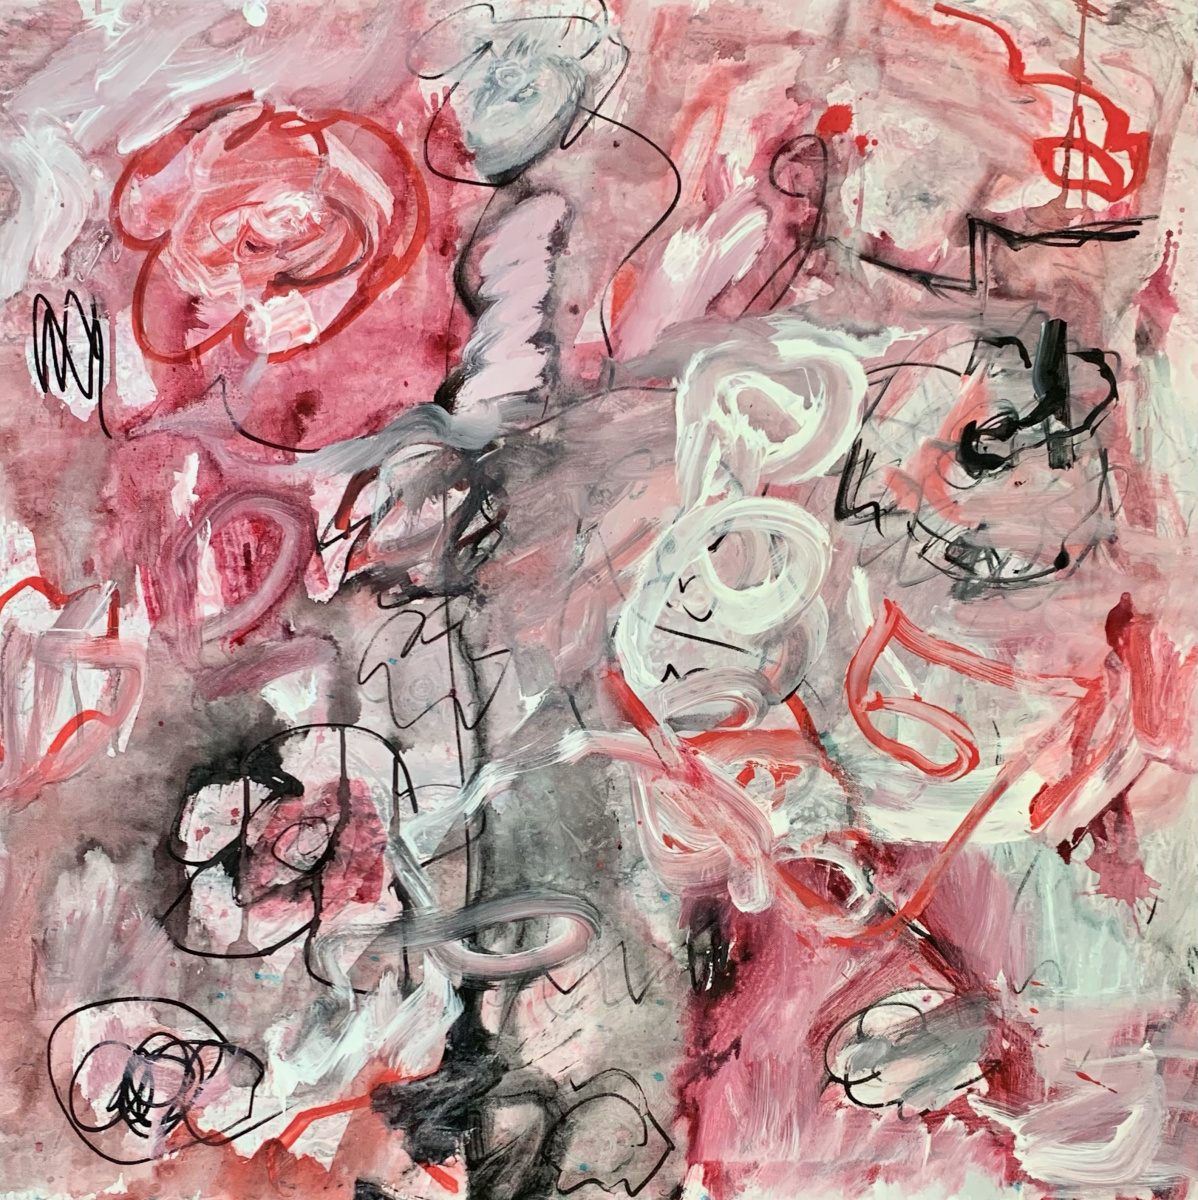 Wild rose#1, acrylic on canvas 36x36"$3200